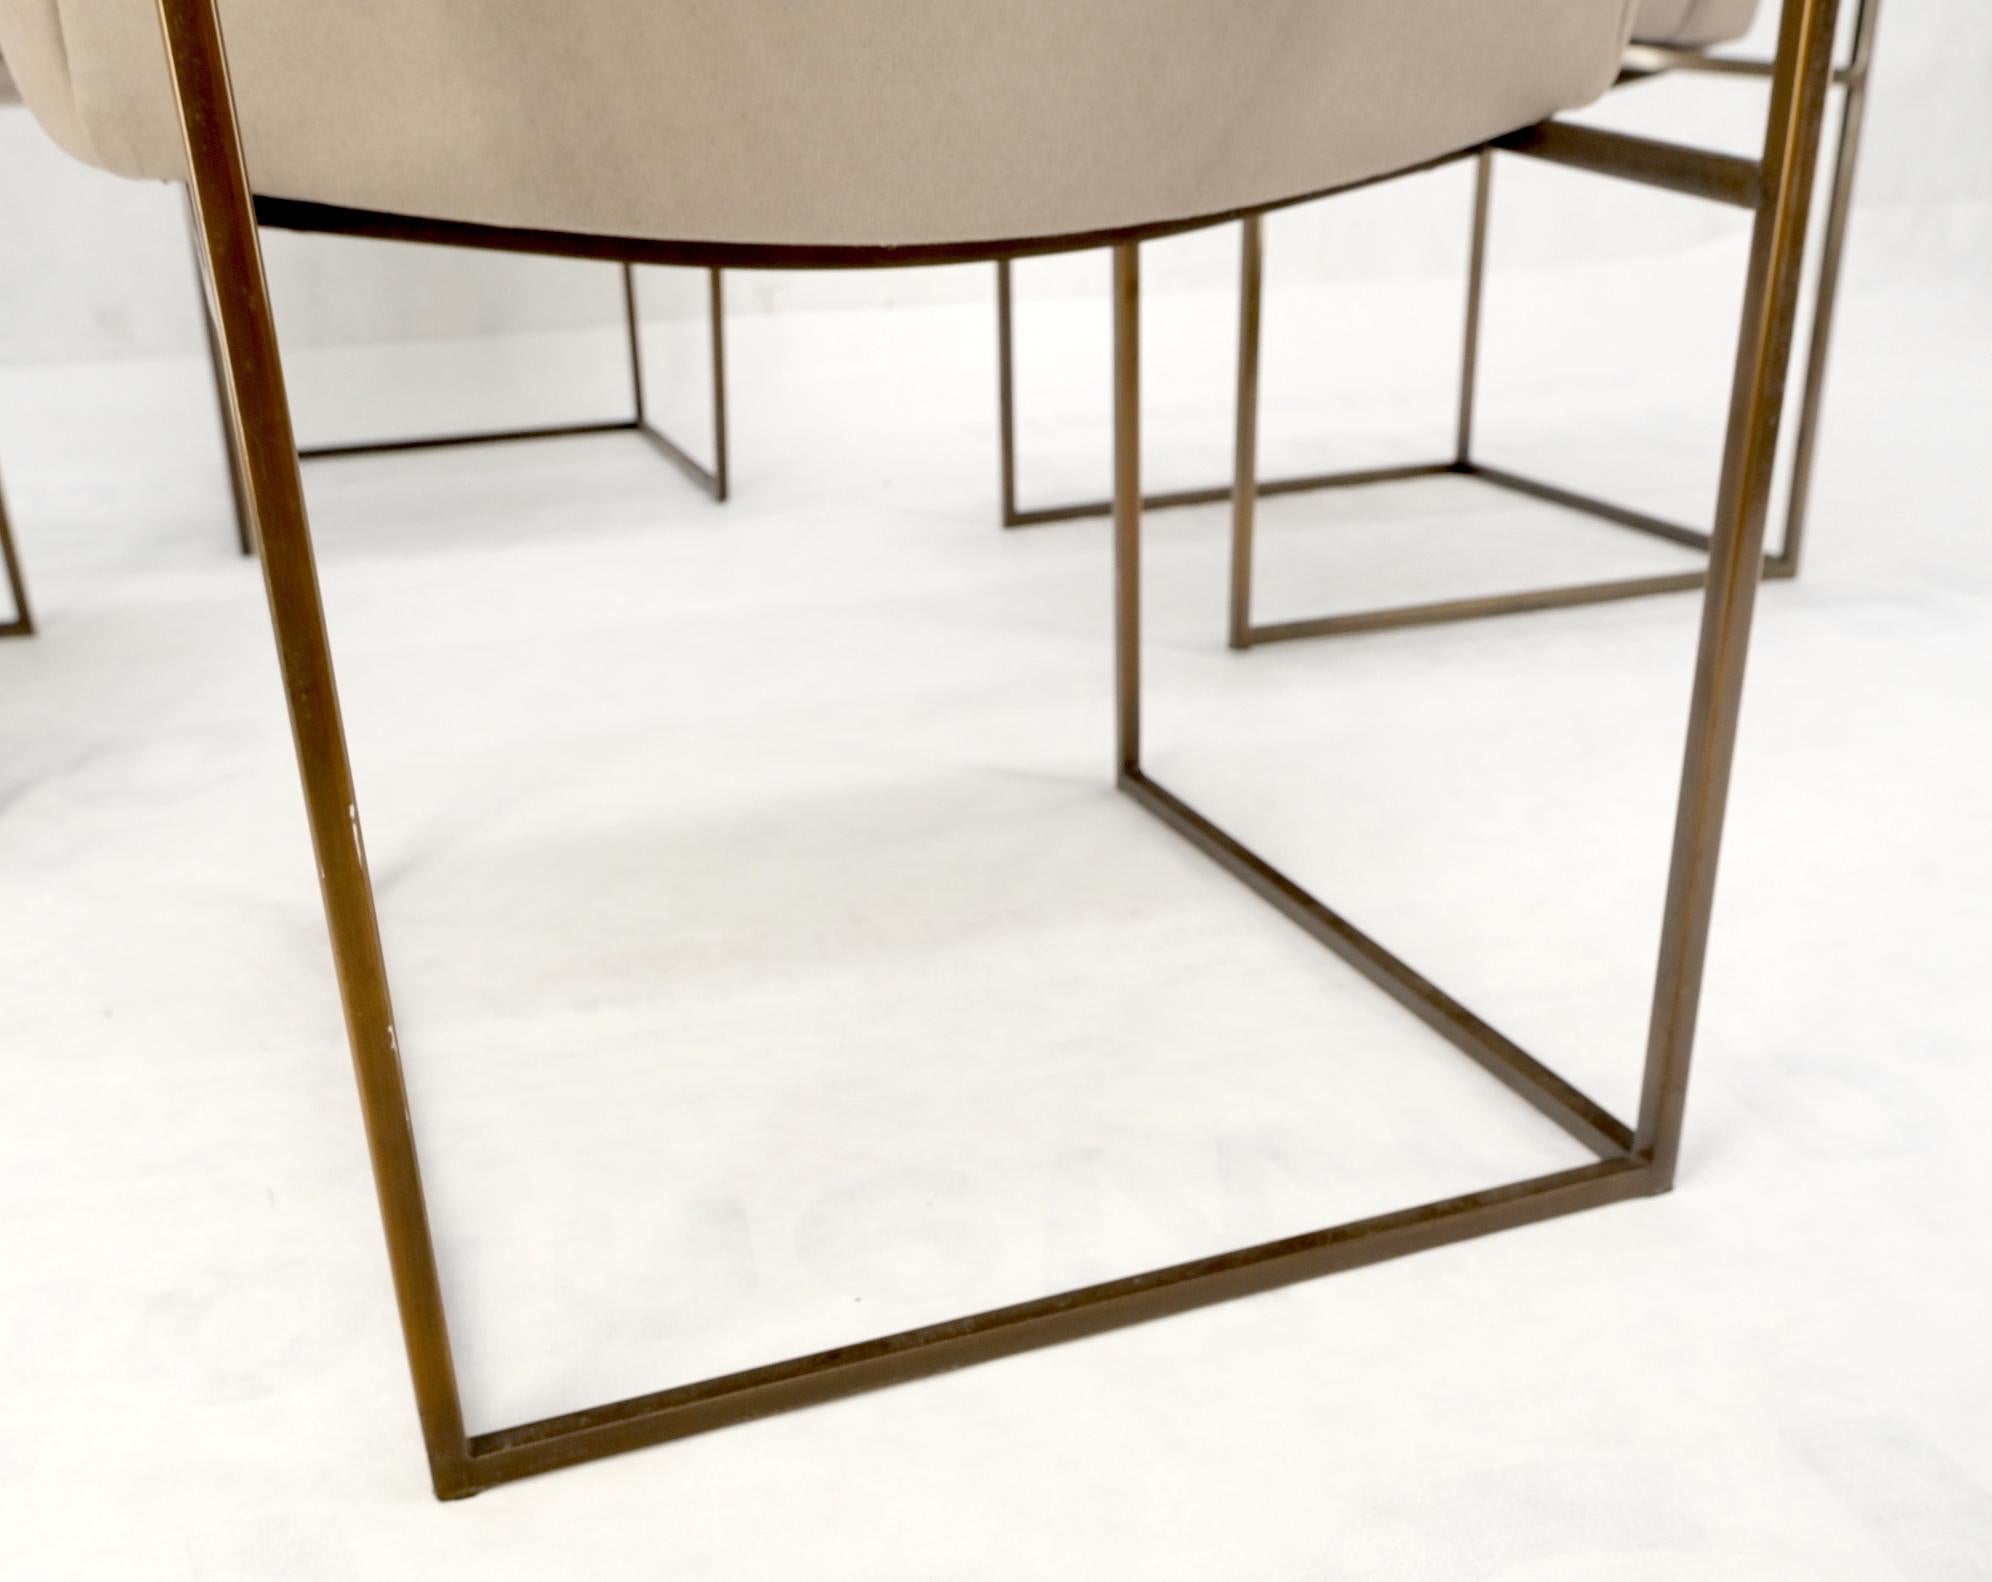 Set of brass frames 4 Milo Baughman Mid-Century Modern dining chairs new alcantera upholstery.